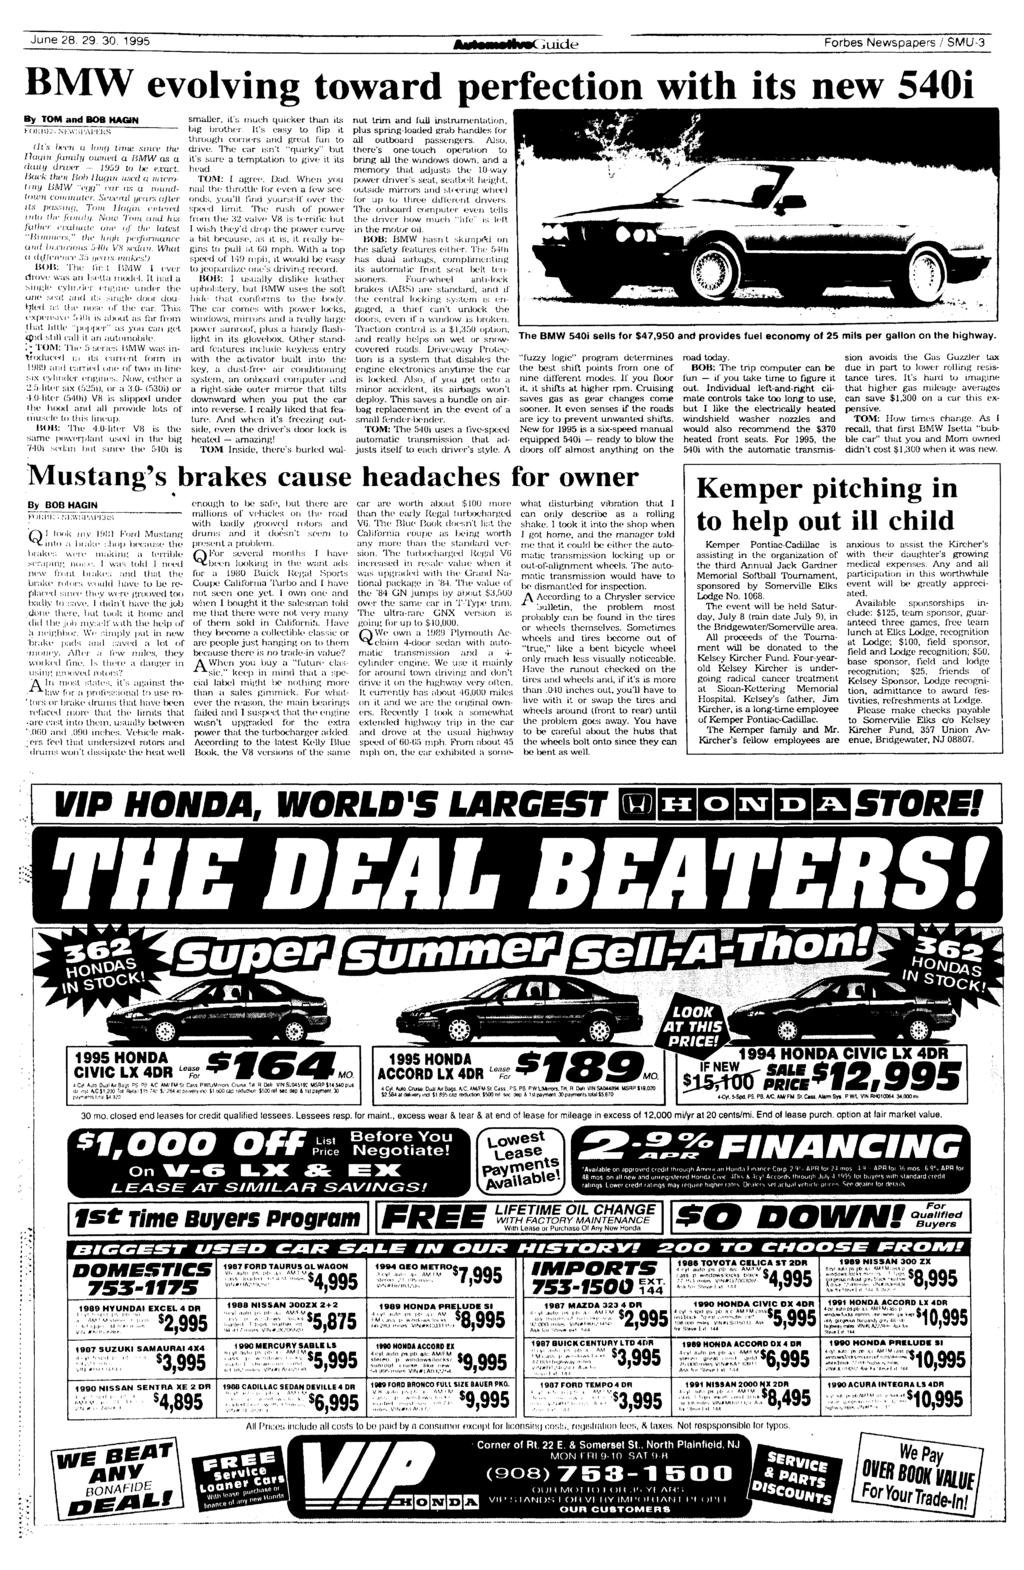 June 28. 29. 30, 1995 juide Forbes Newspapers / SMU-3 BMW evolving toward perfection with its new 540i By TOM and BOB MAGN KOJU'.>. MKWSl'AiT.KS ~ ~" ~ (t's fx'i'ti a lontj mie,.